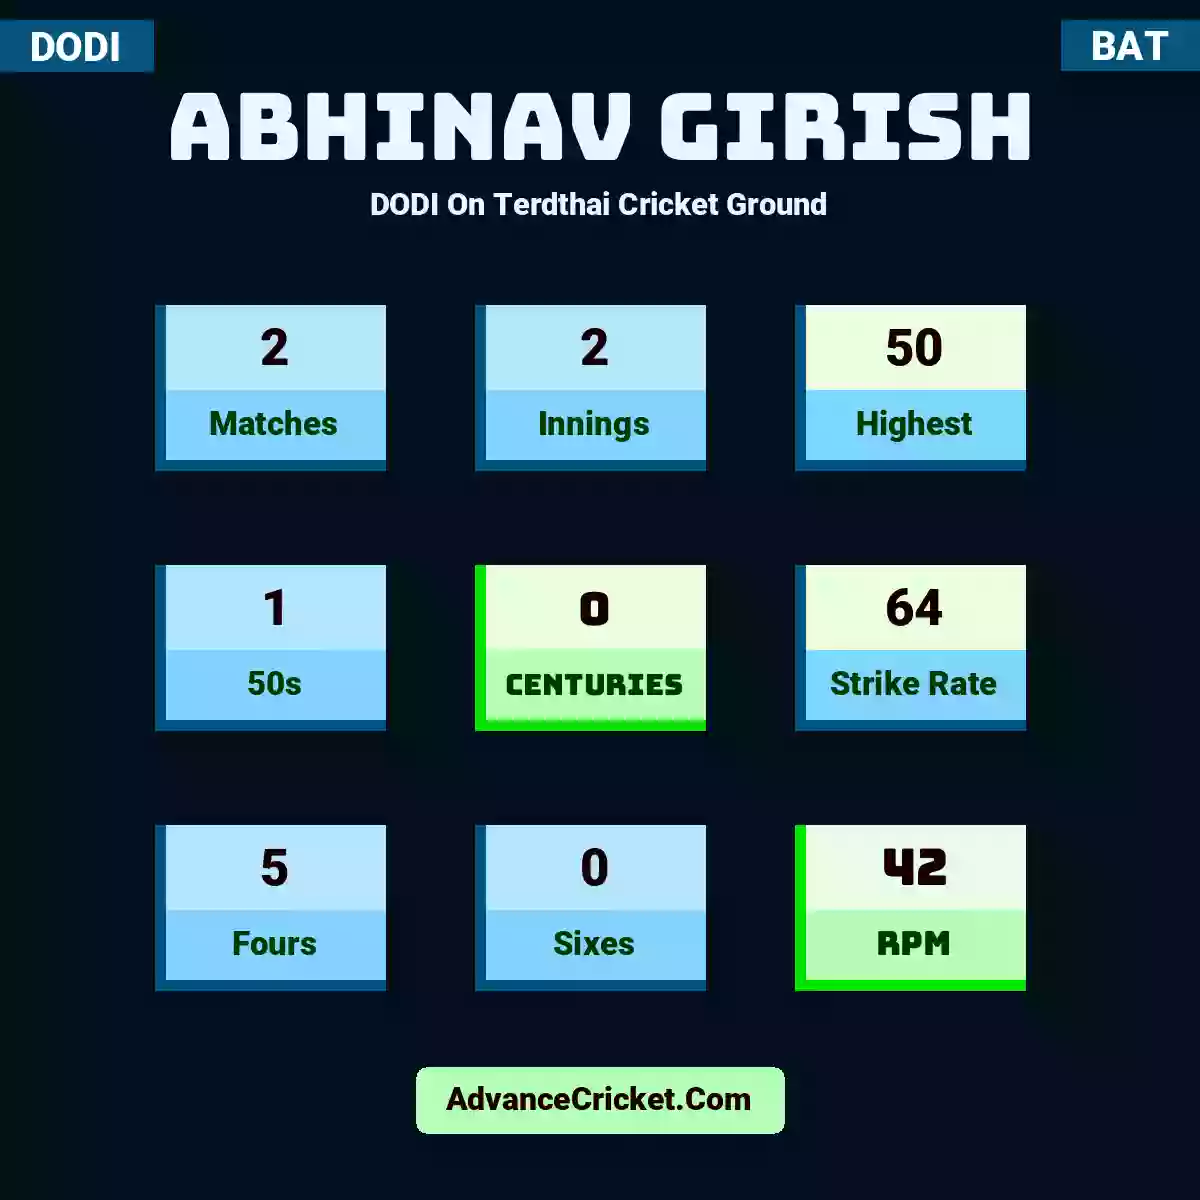 Abhinav Girish DODI  On Terdthai Cricket Ground, Abhinav Girish played 2 matches, scored 50 runs as highest, 1 half-centuries, and 0 centuries, with a strike rate of 64. A.Girish hit 5 fours and 0 sixes, with an RPM of 42.